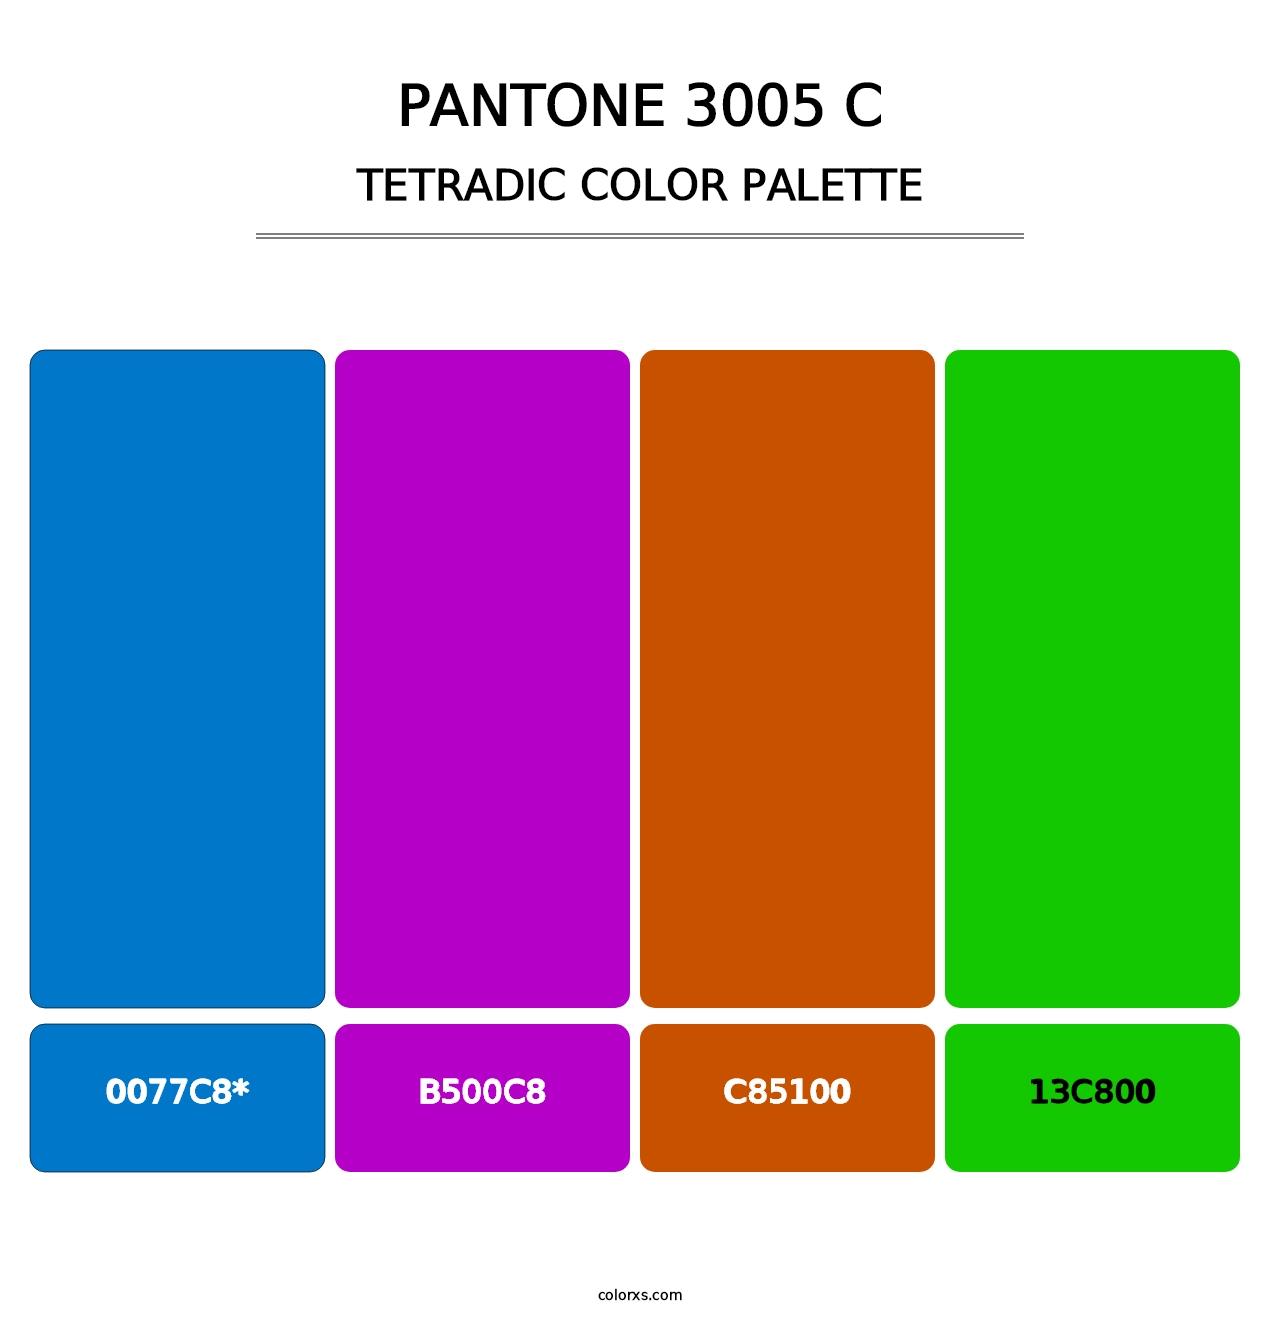 PANTONE 3005 C - Tetradic Color Palette